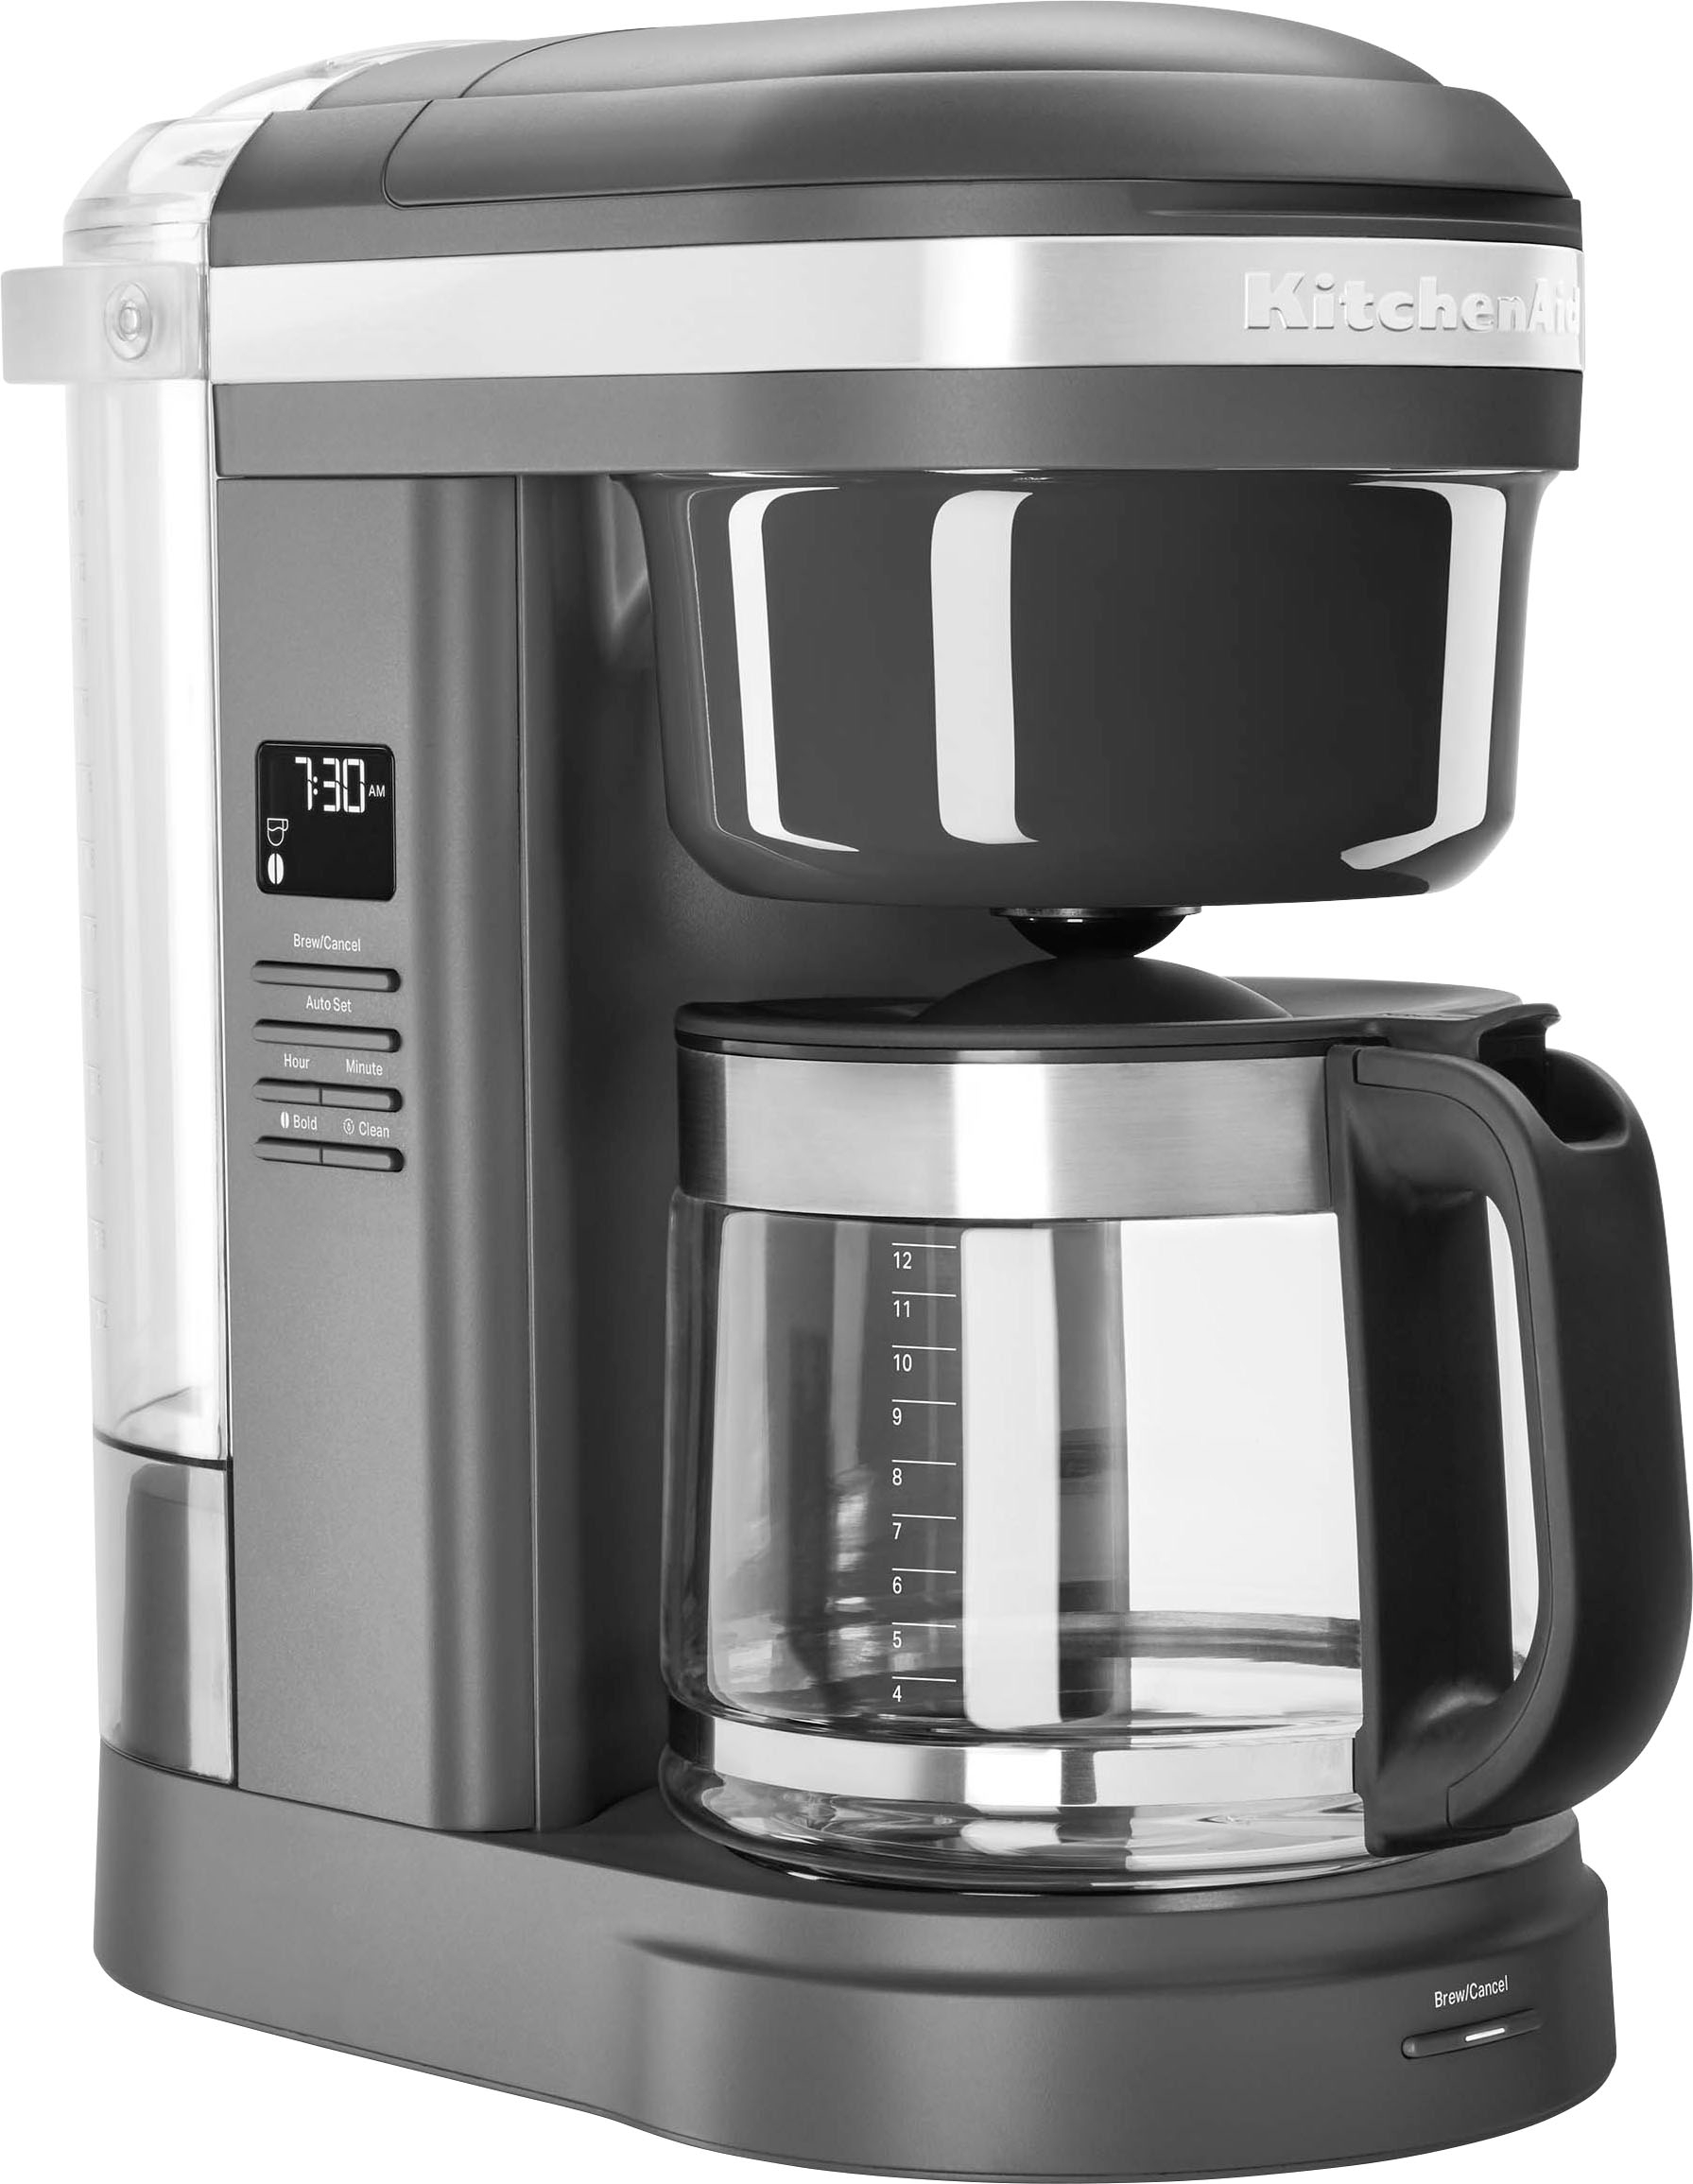 Angle View: KitchenAid - 12-Cup Coffee Maker - Matte Charcoal Gray